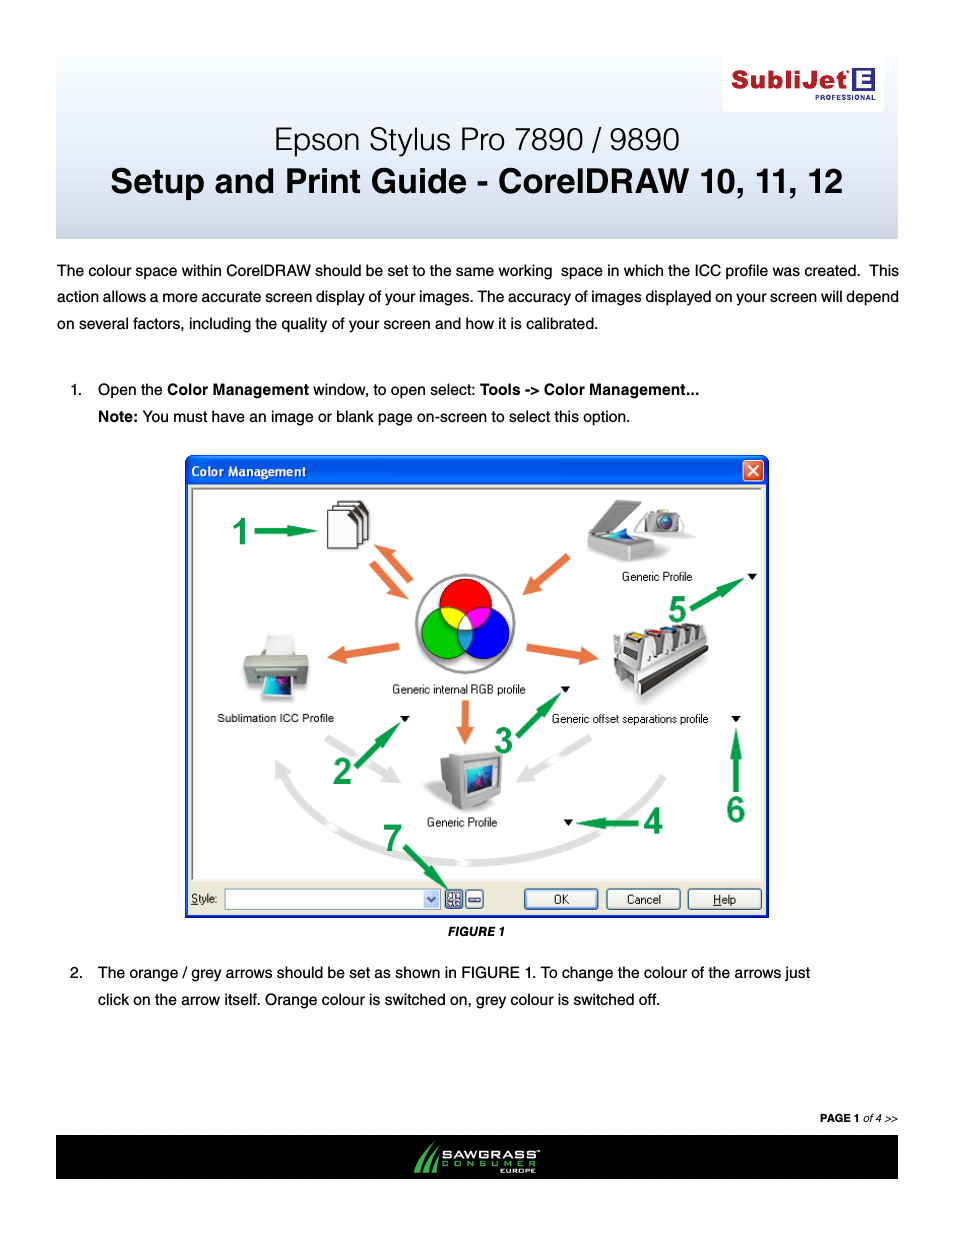 SubliJet E Epson Stylus Pro 7890 (Windows ICC Profile Setup): Print & Setup Guide CorelDRAW 10 - 12